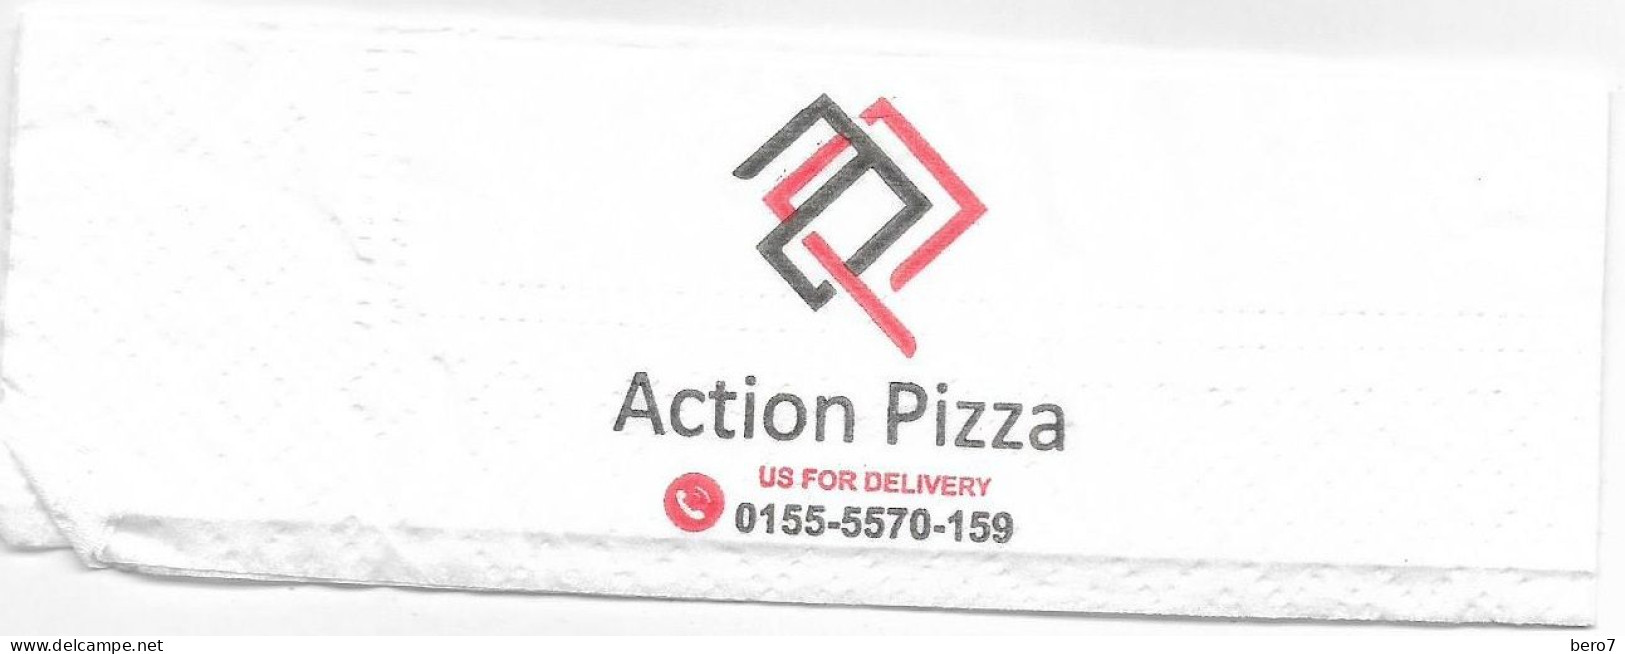 EGYPT - Action Pizza Napkins (Egypte) (Egitto) (Ägypten) (Egipto) (Egypten) Africa - Company Logo Napkins